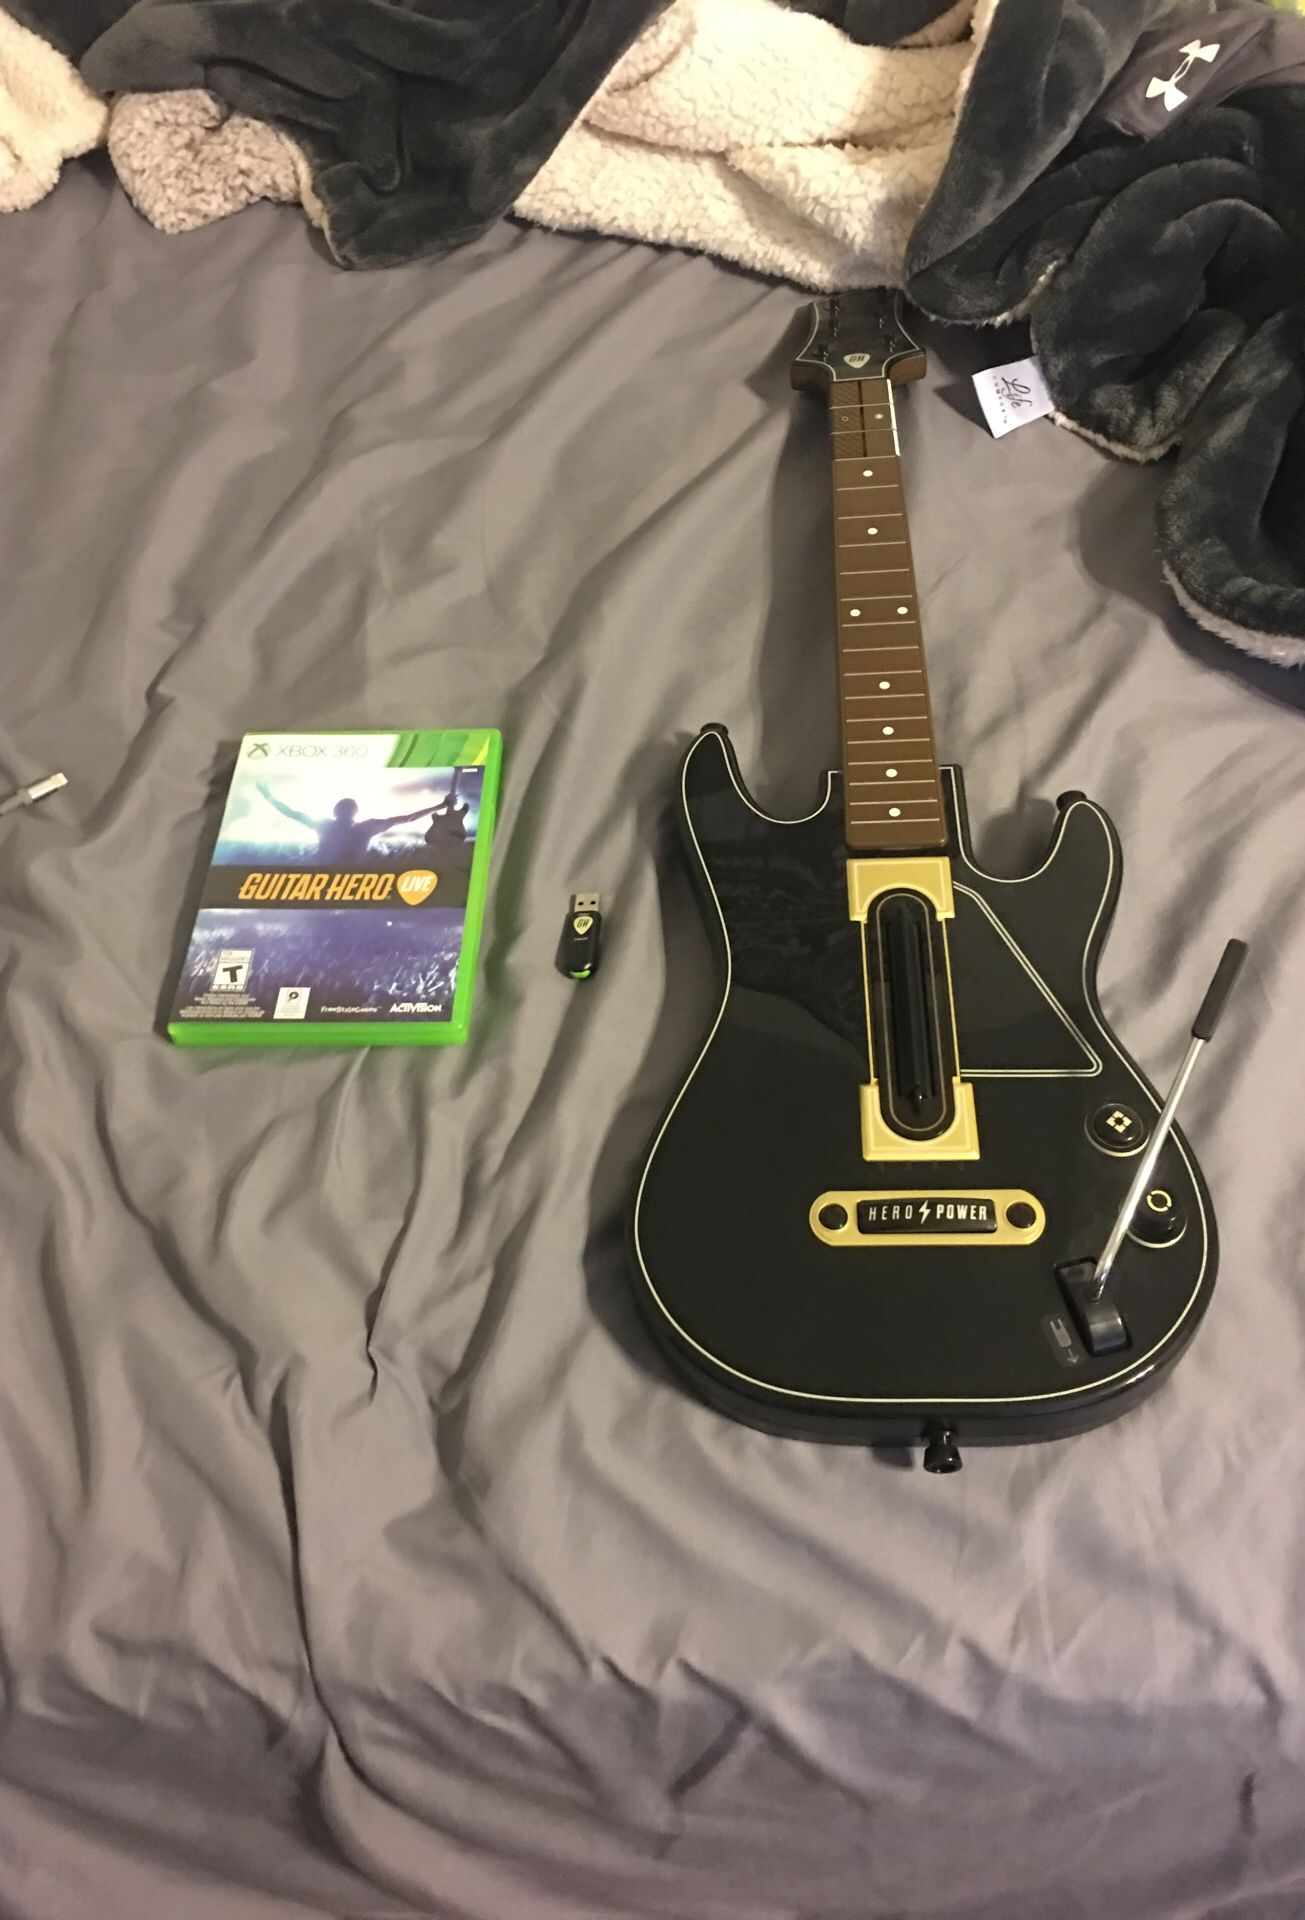 Xbox 360 Guitar Hero Live Guitar Game and USB port